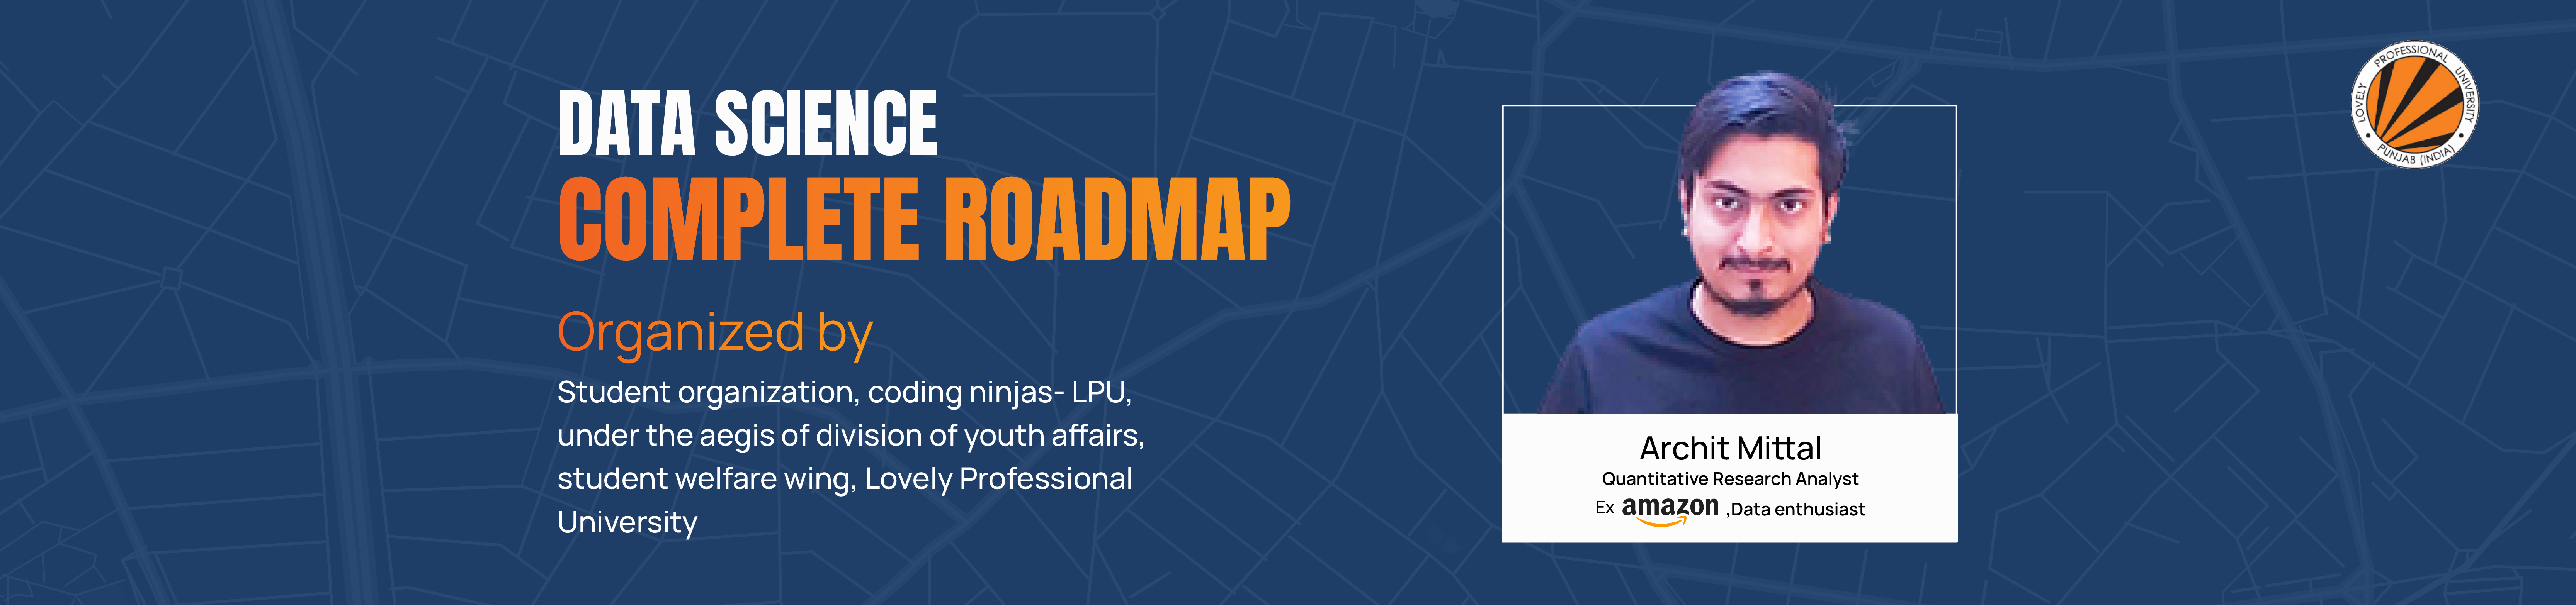 Data science complete roadmap | LPU x Coding Ninjas 